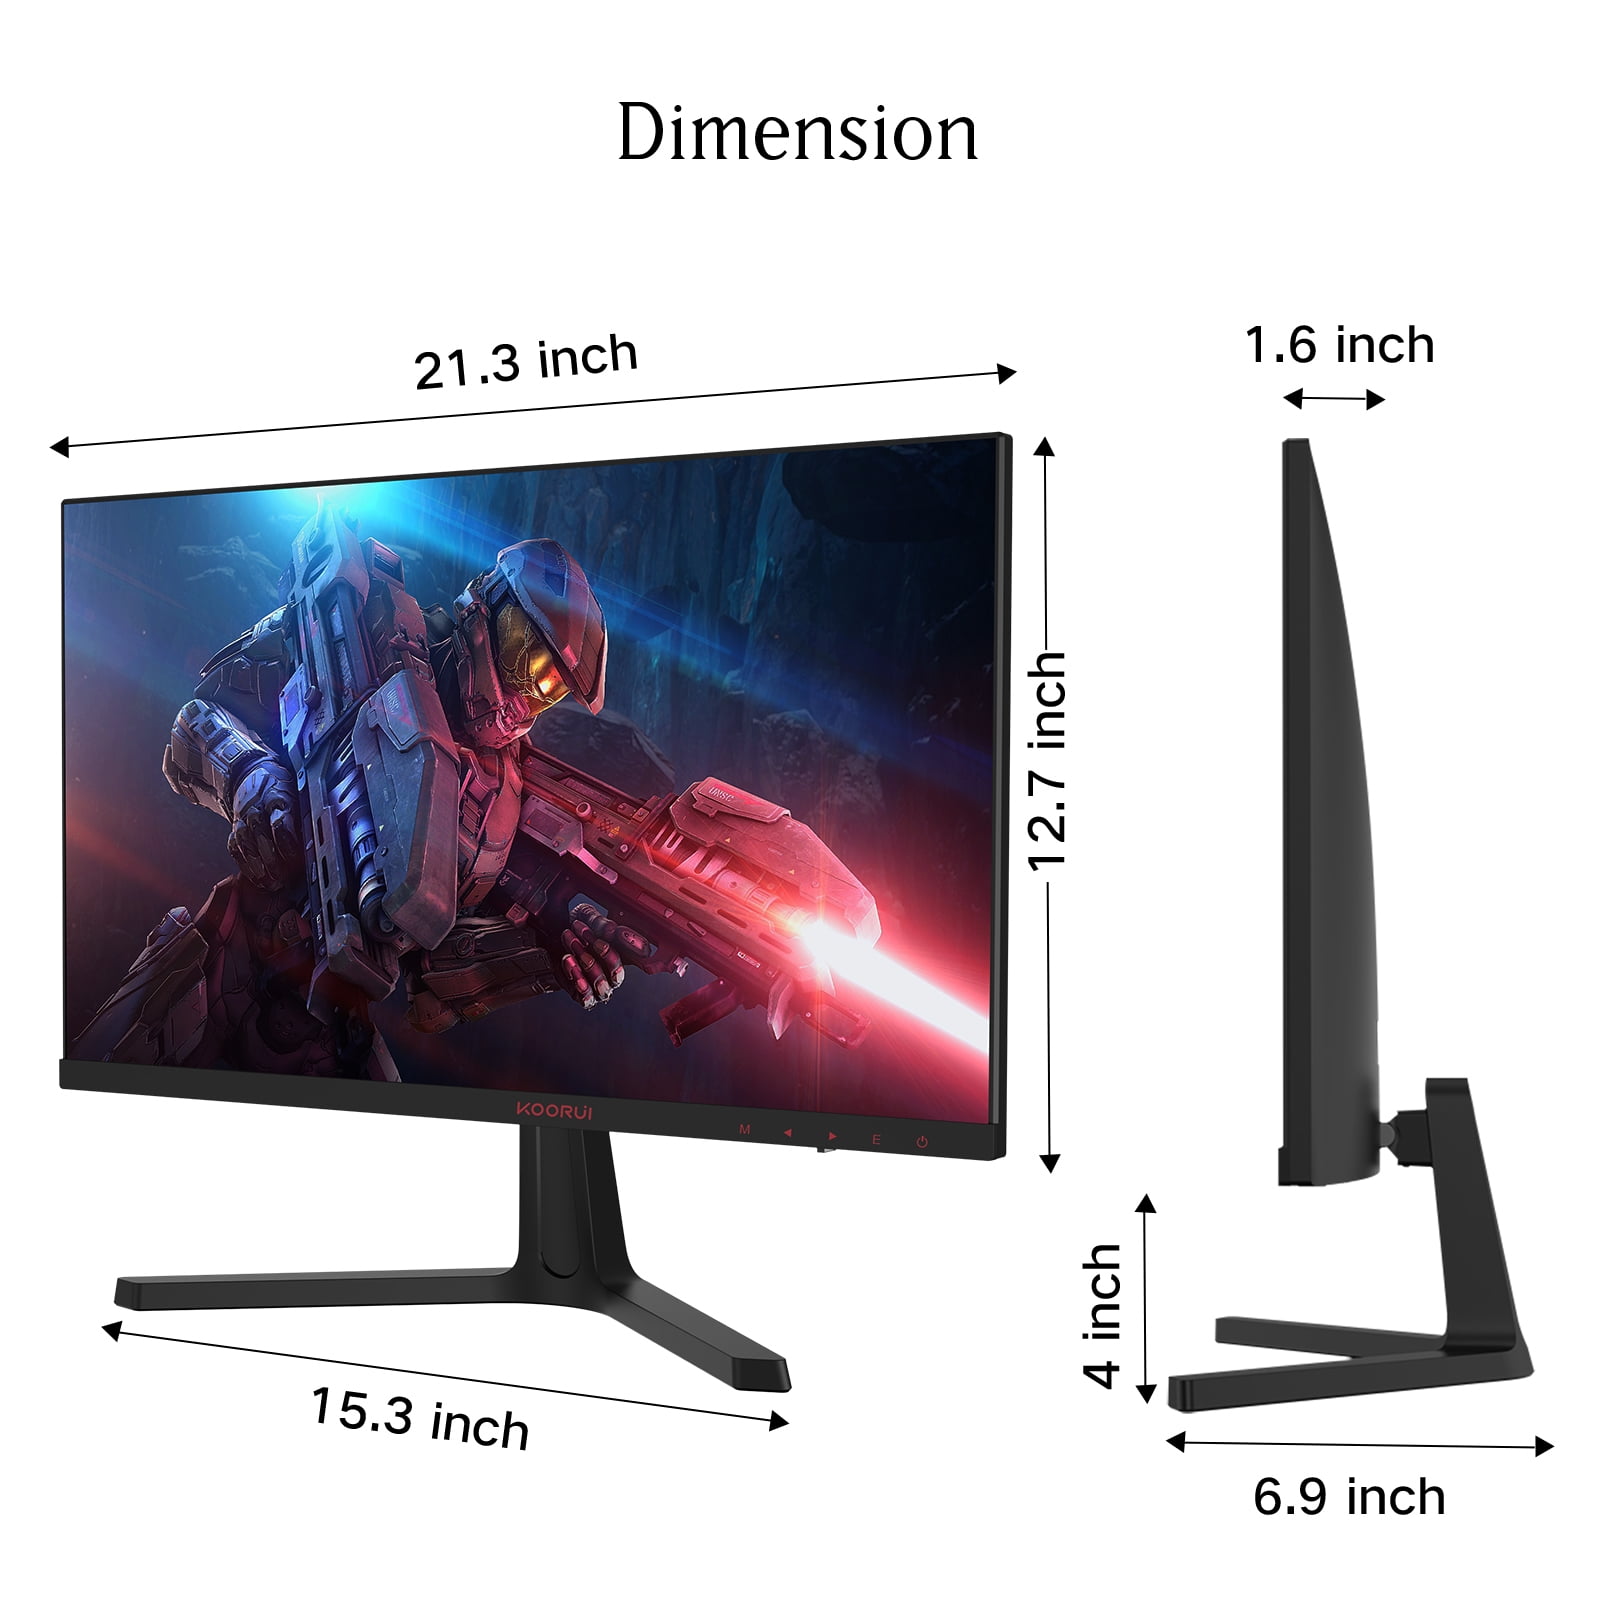 KOORUI 24 Inch Gaming Monitor, 165Hz IPS 1080p 1ms Adaptive Sync,  Frameless, HDMI, DisplayPort, Tilt Adjustable, Eye Care, VESA Wall Mount，  Black